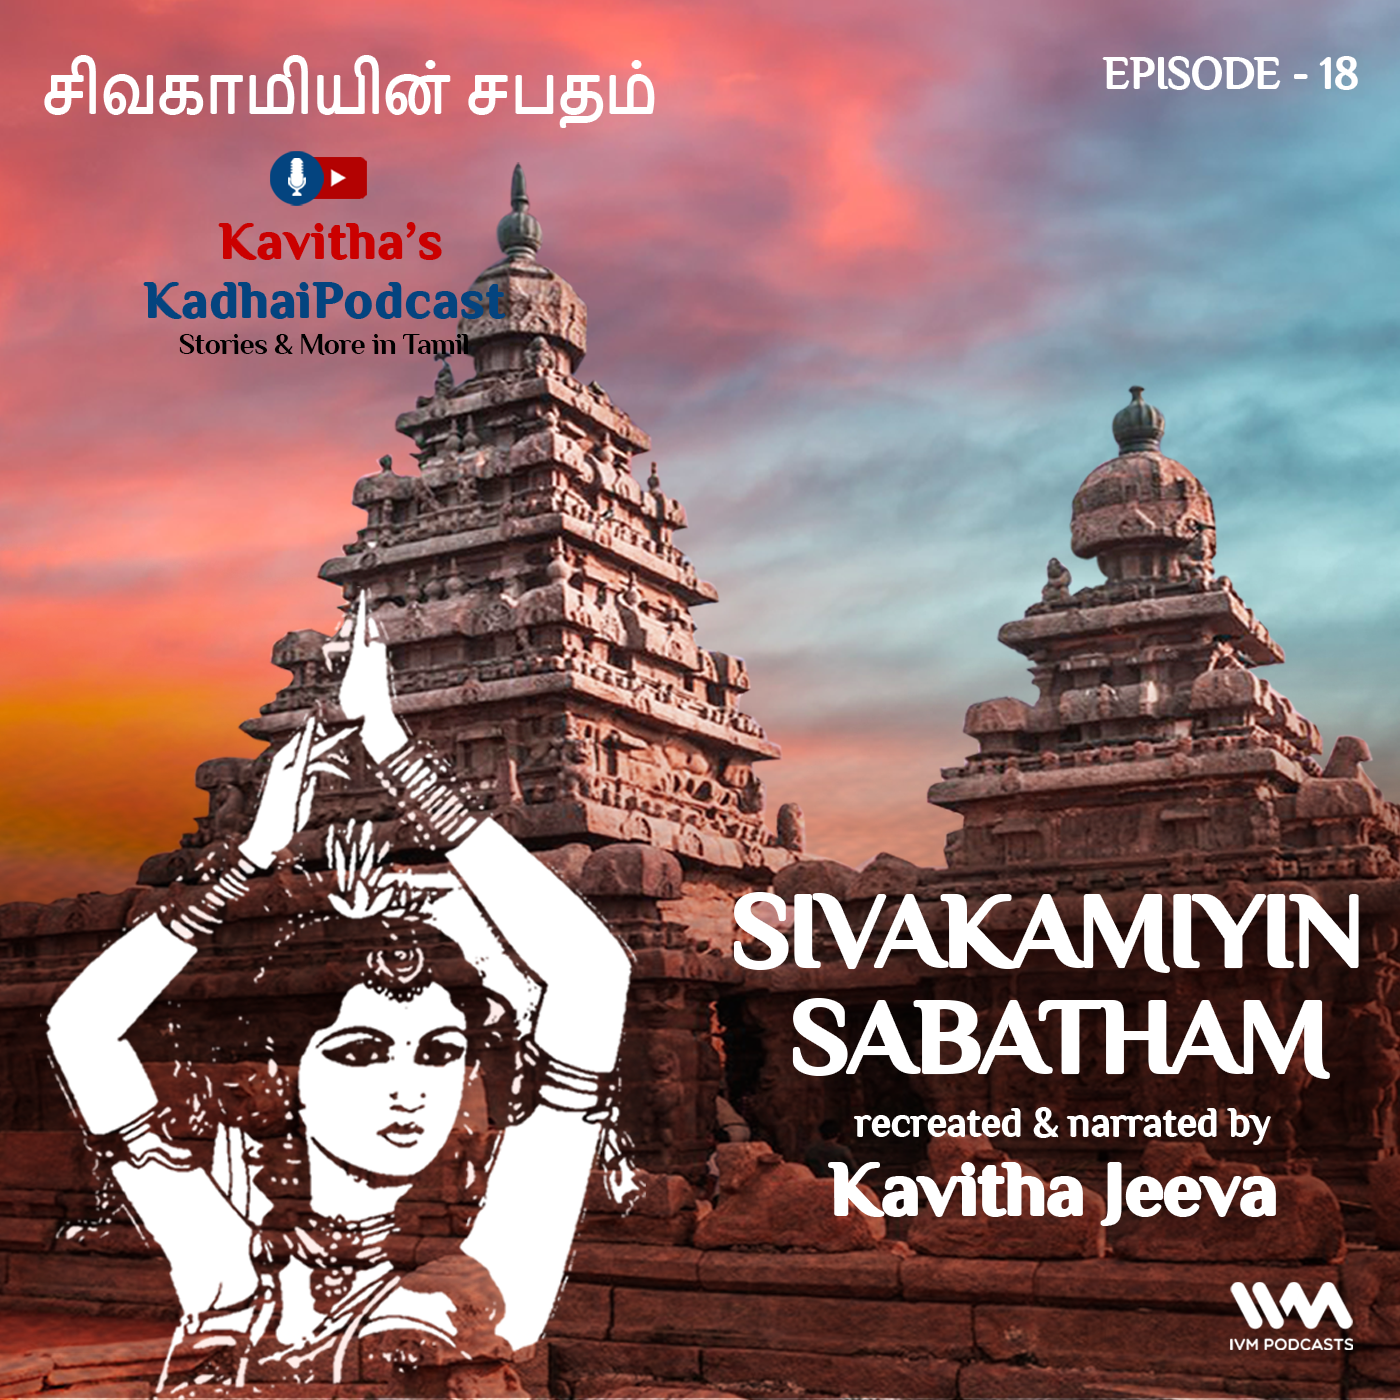 KadhaiPodcast's Sivakamiyin Sabatham - Episode # 18